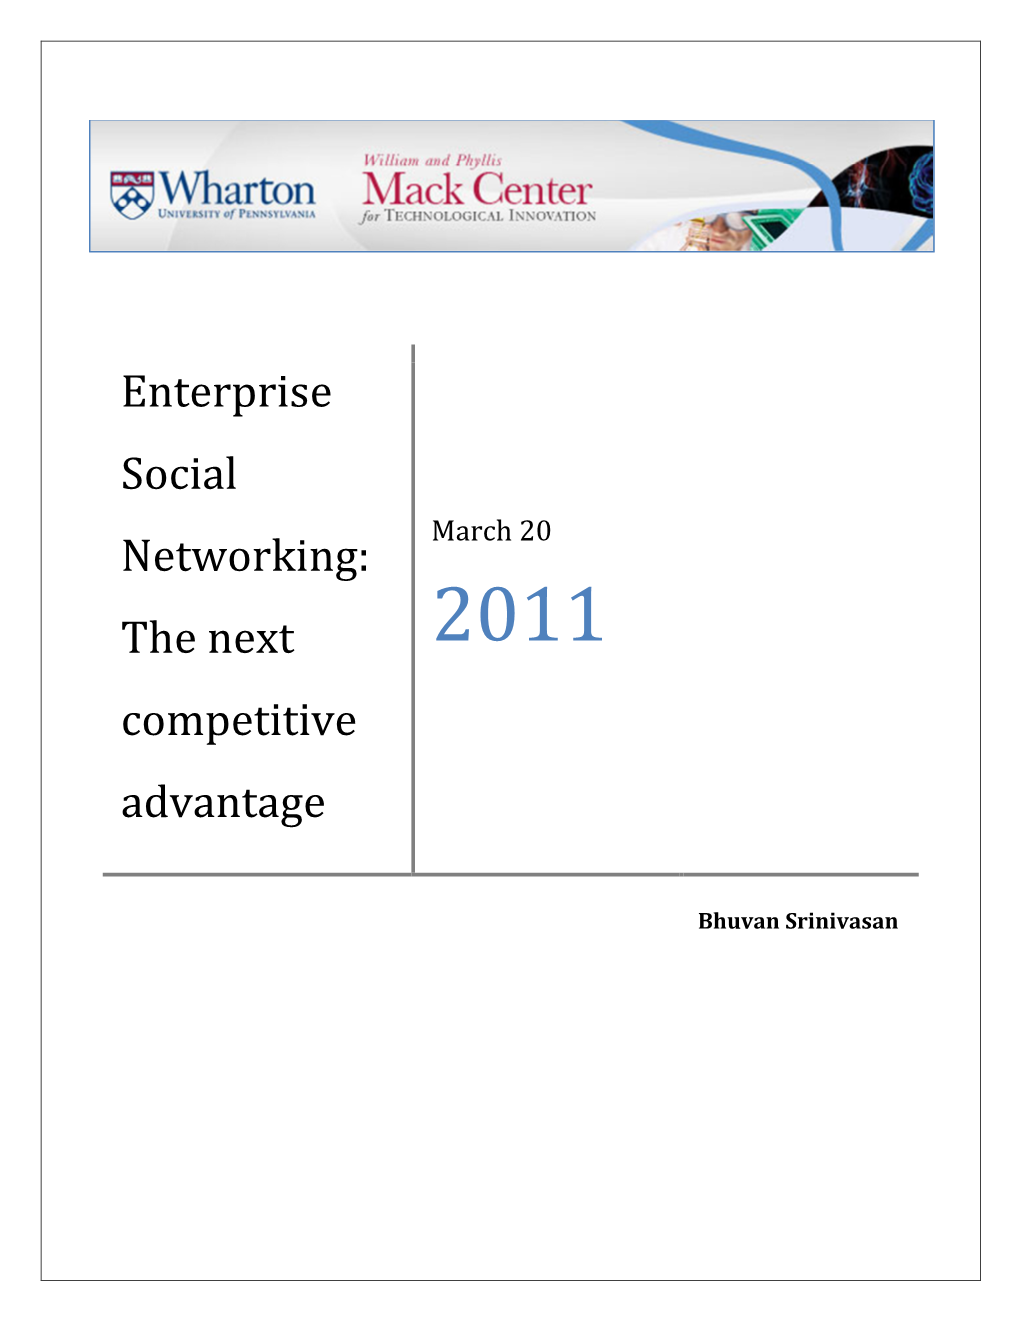 Enterprise Social Networking (ESN)